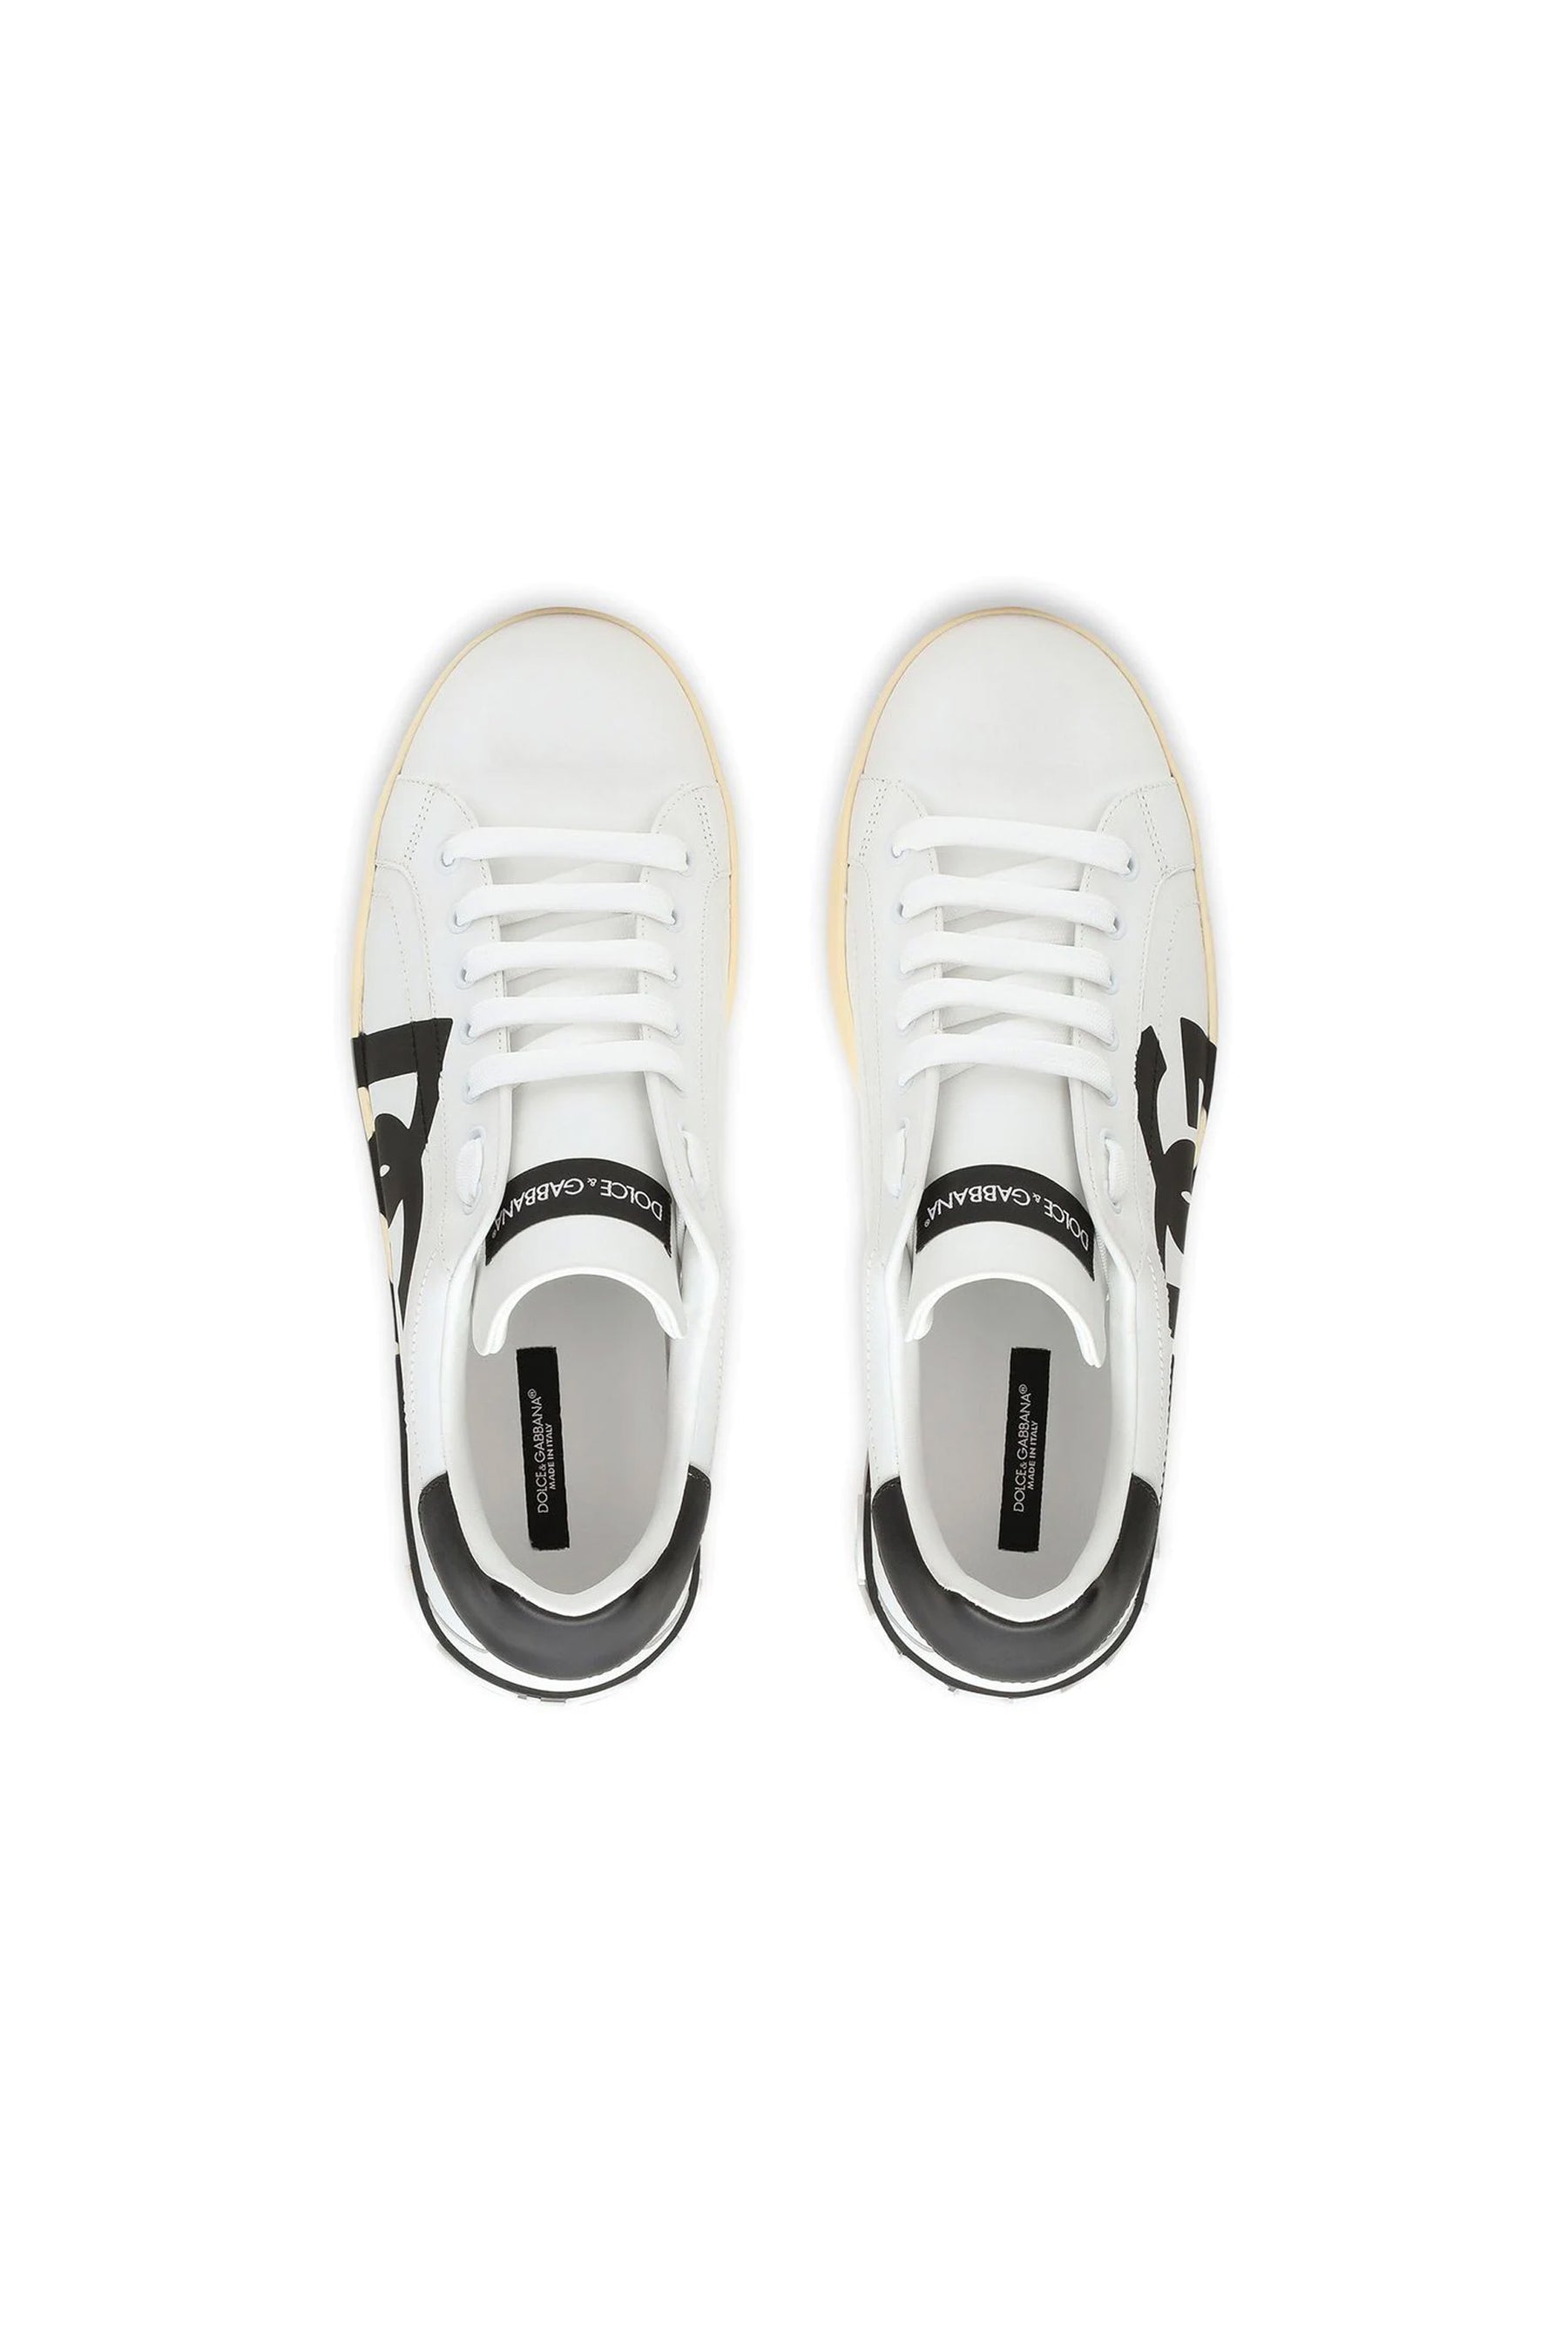 Dolce & Gabbana Portofino logo-print sneakers